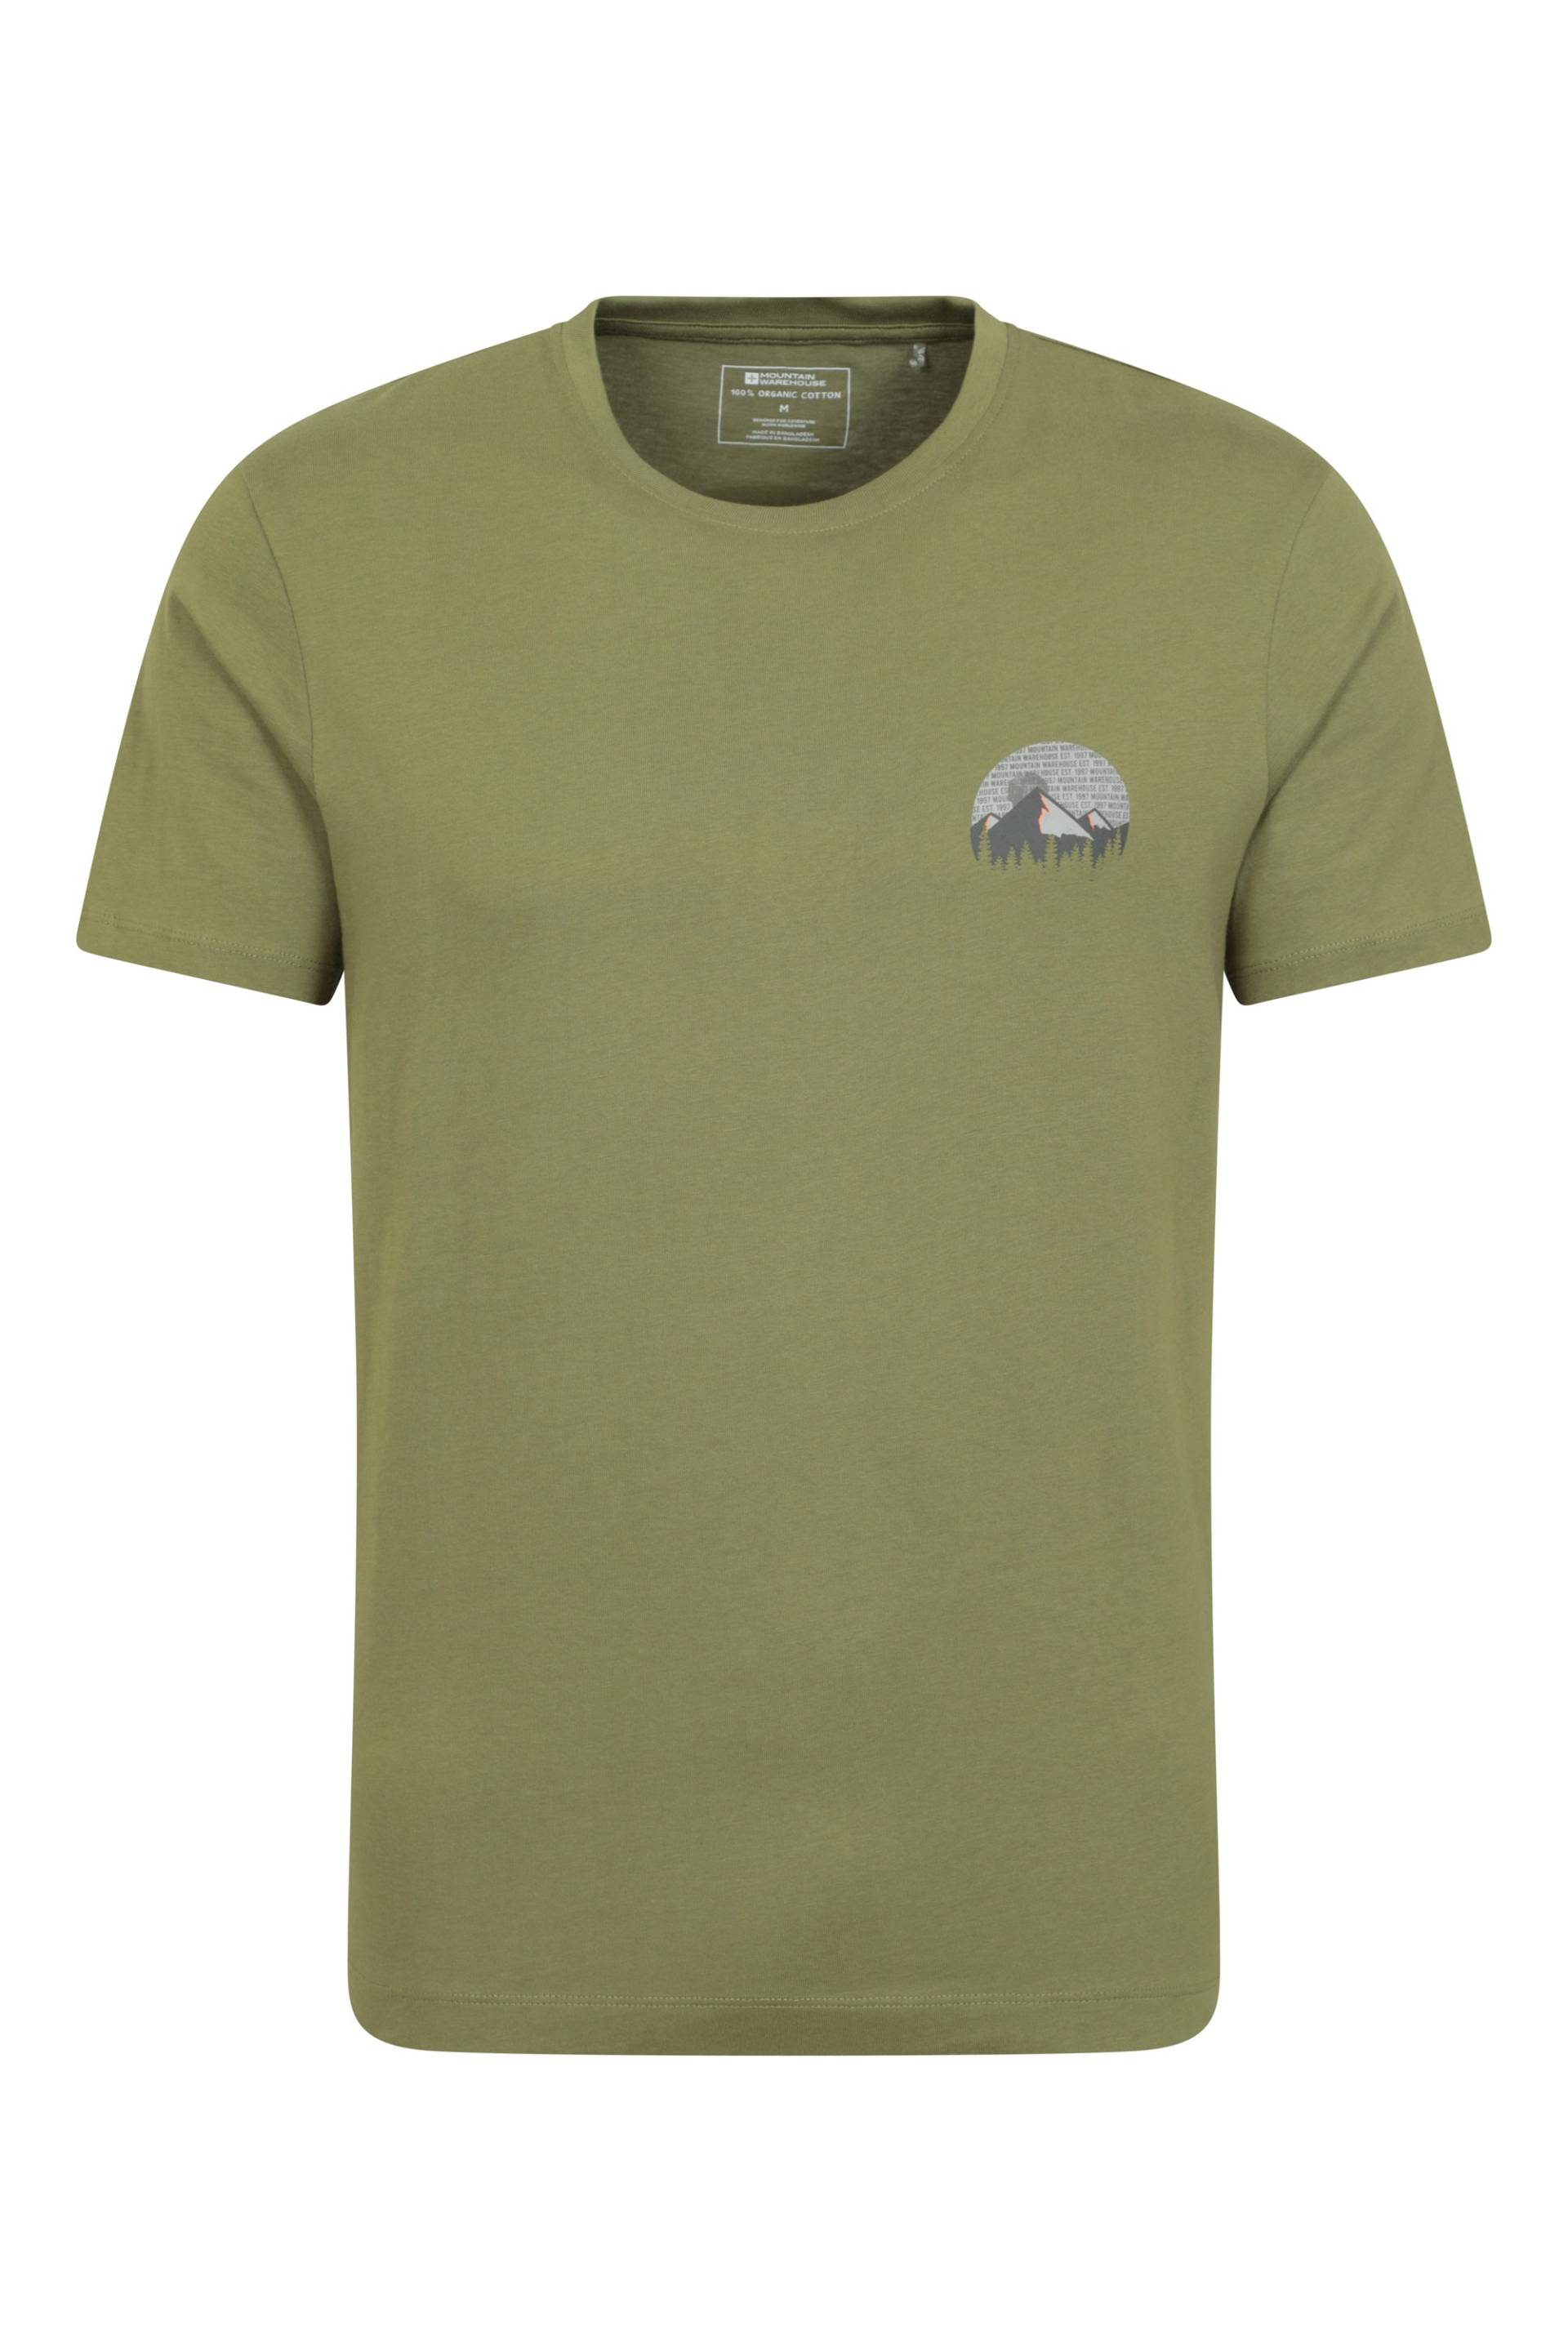 Circle Mountain Bio-Baumwoll Herren T-Shirt - Khaki von Mountain Warehouse